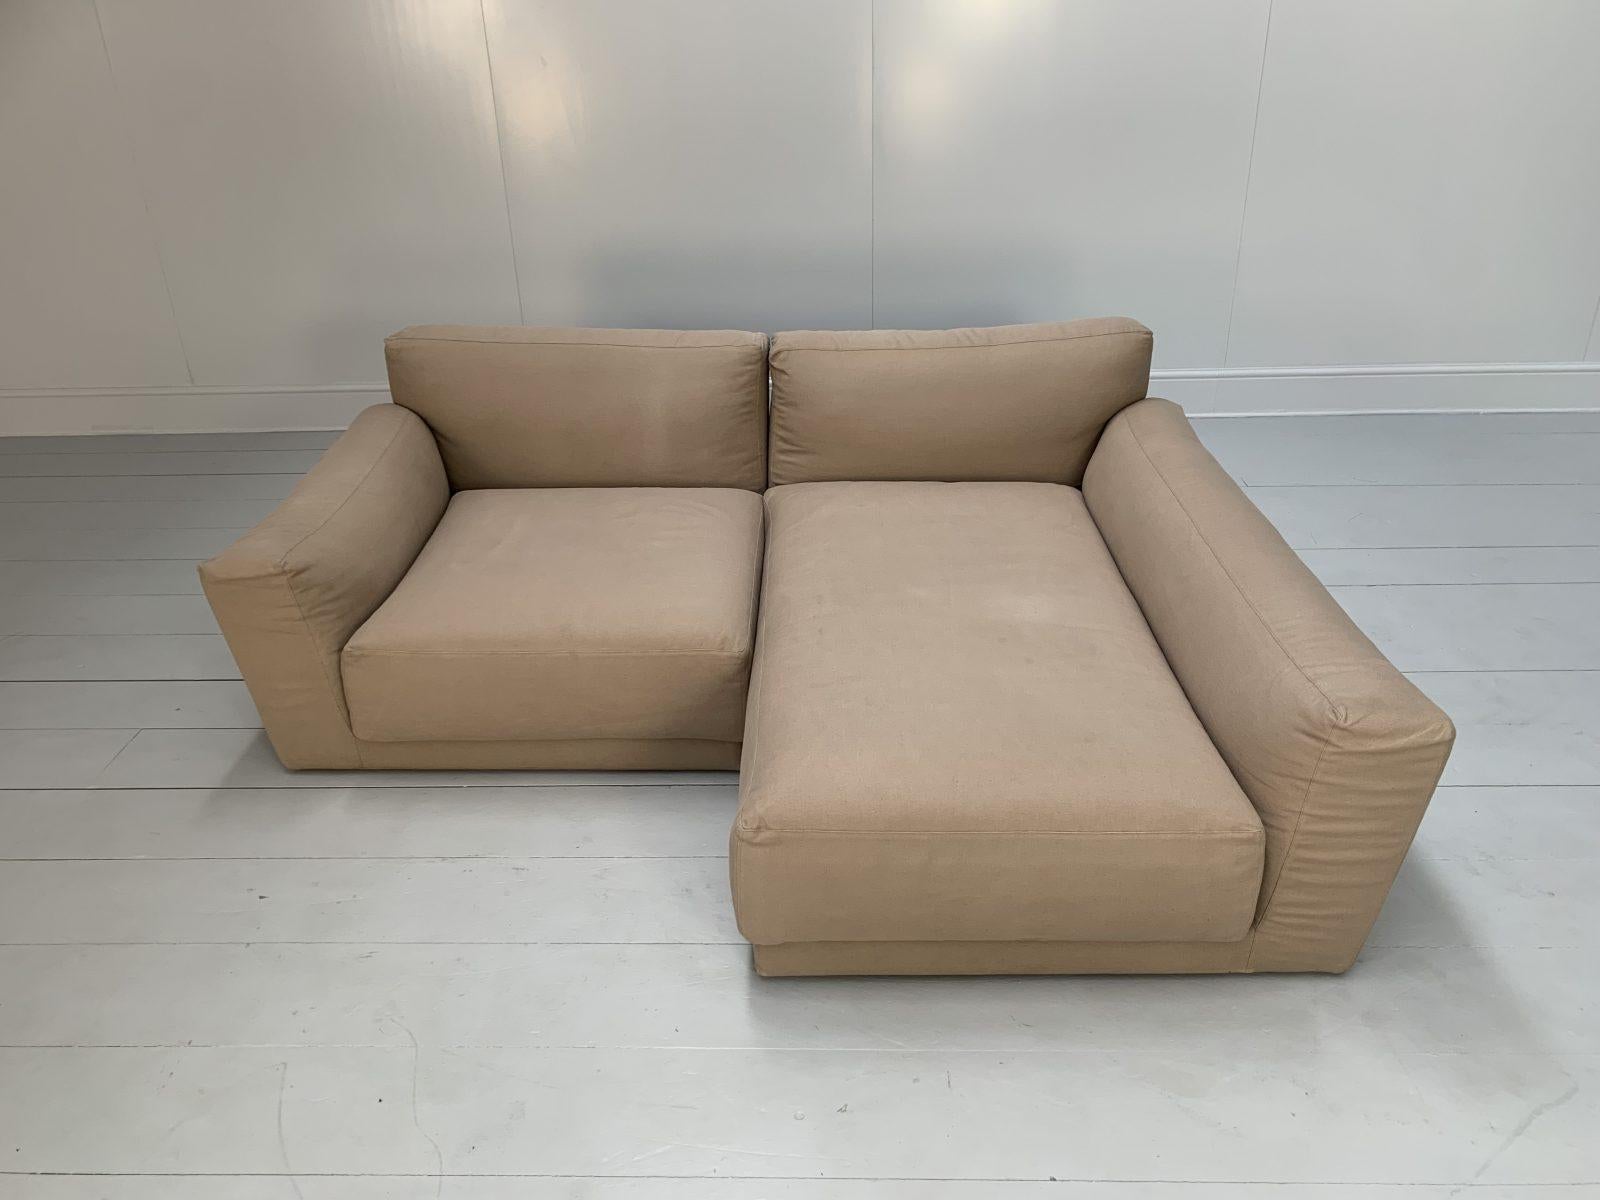 B&B Italia “Luis” 3-Seat Compact L-Shape Sofa – In “Ellade” Linen For Sale 2